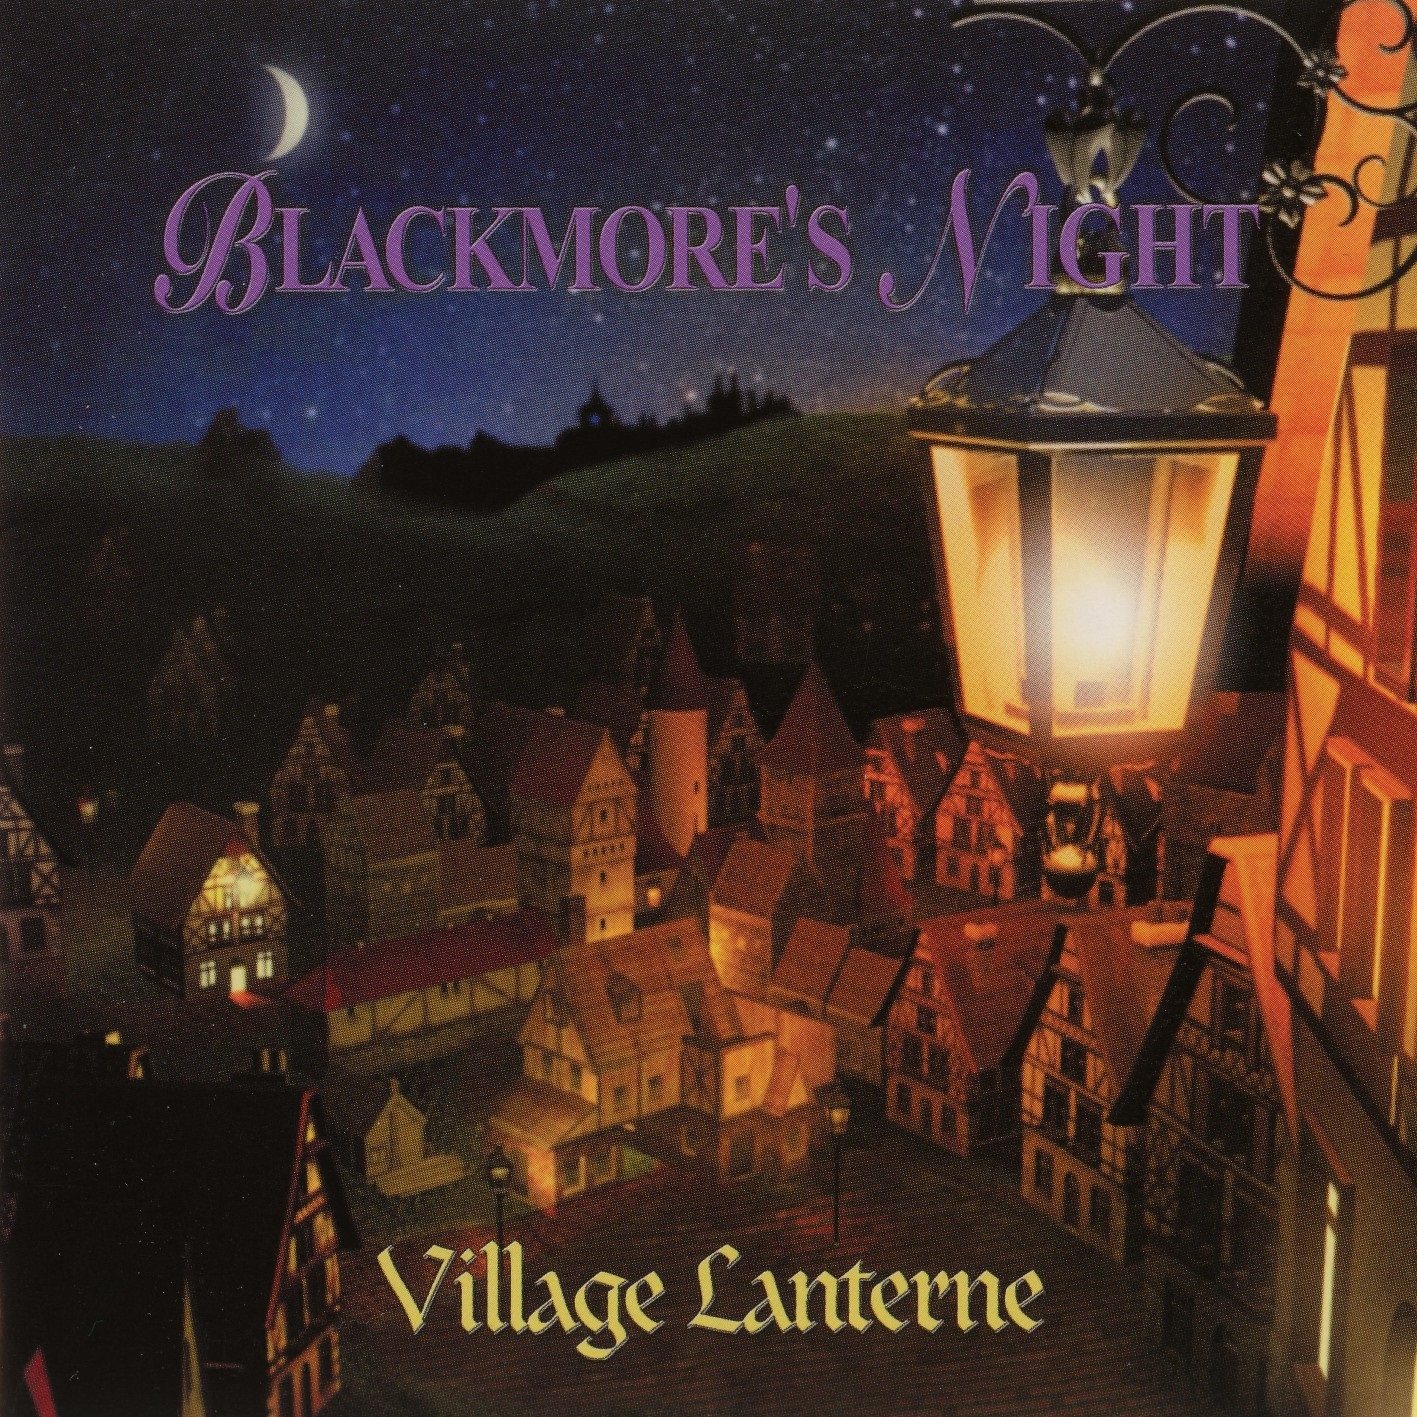 Blackmores night shadow of the moon. Blackmore's Night Village lanterne. Blackmore's Night - the Village lanterne (2006). Blackmore's Night обложки альбомов. Блэкморс Найт альбомы.